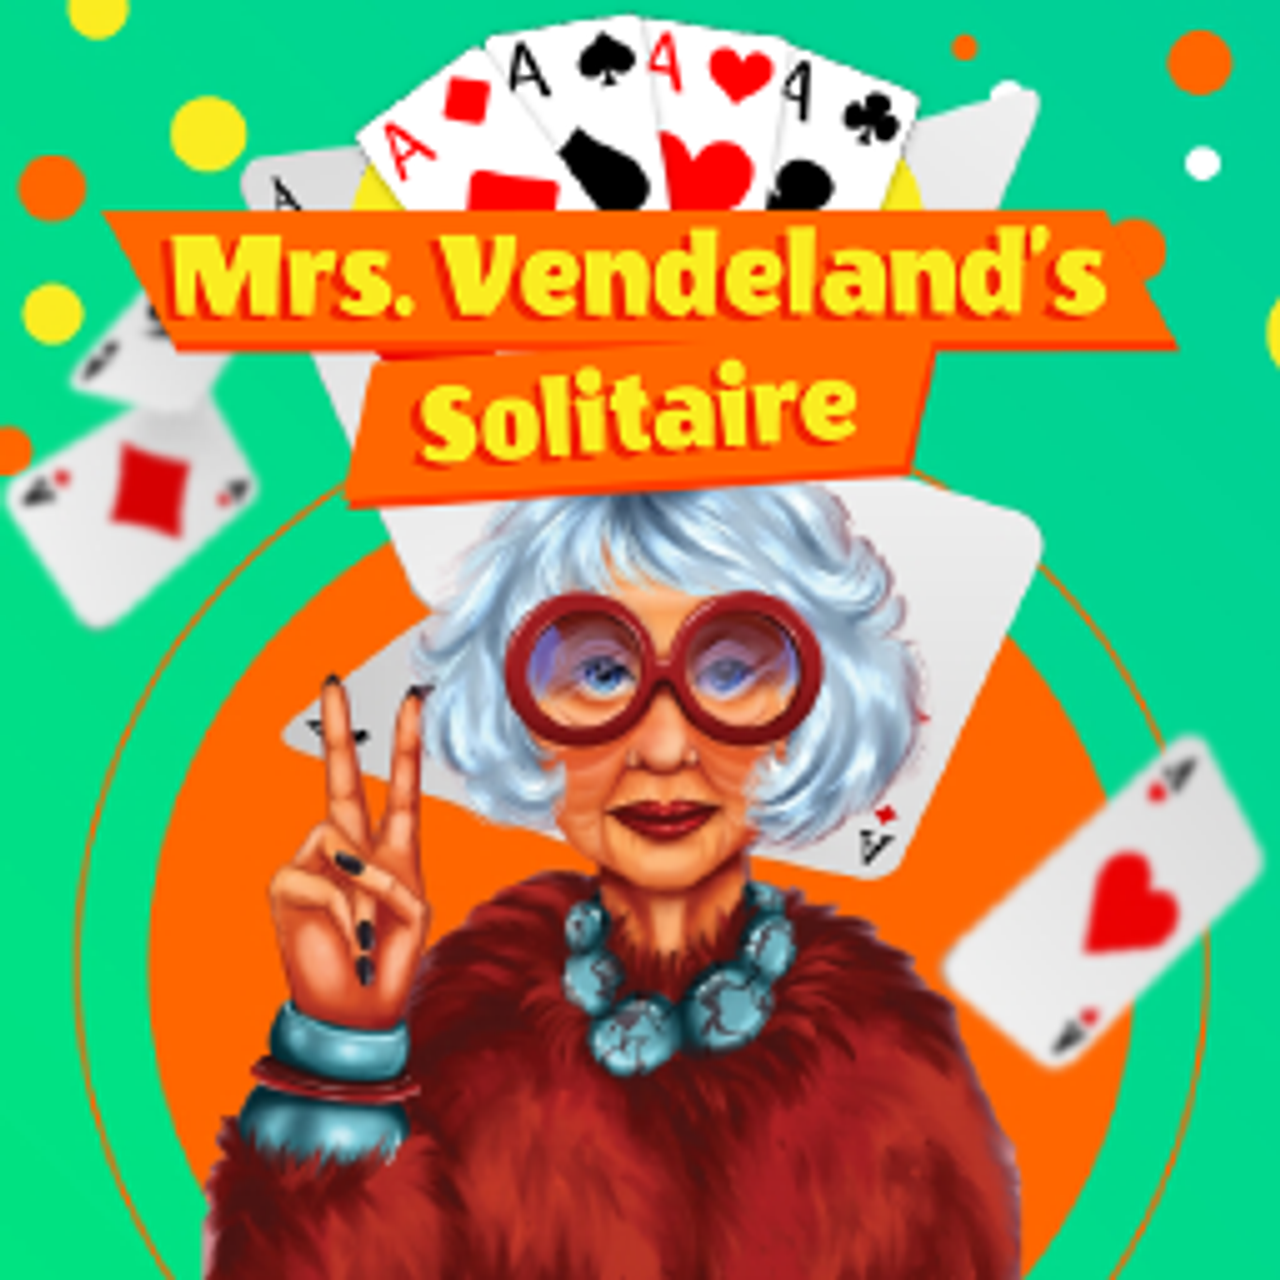 Mrs. Vendeland's Solitaire